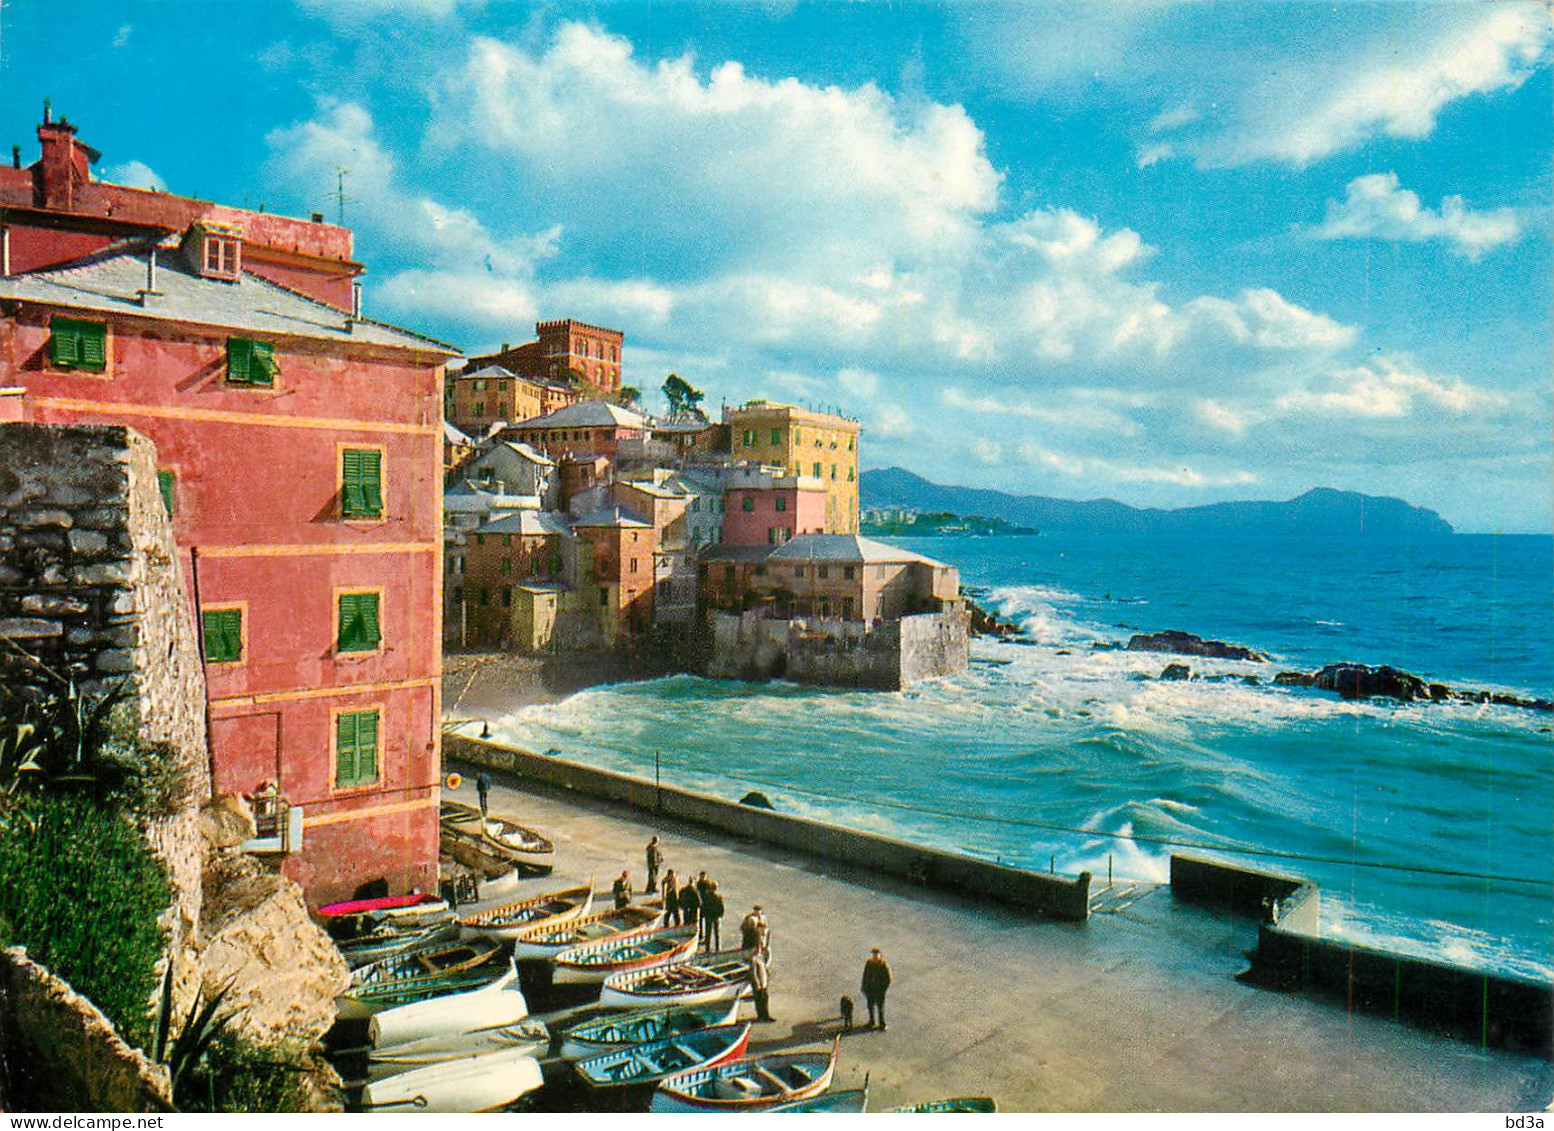 GENOVA BOCCADASSE - Genova (Genoa)